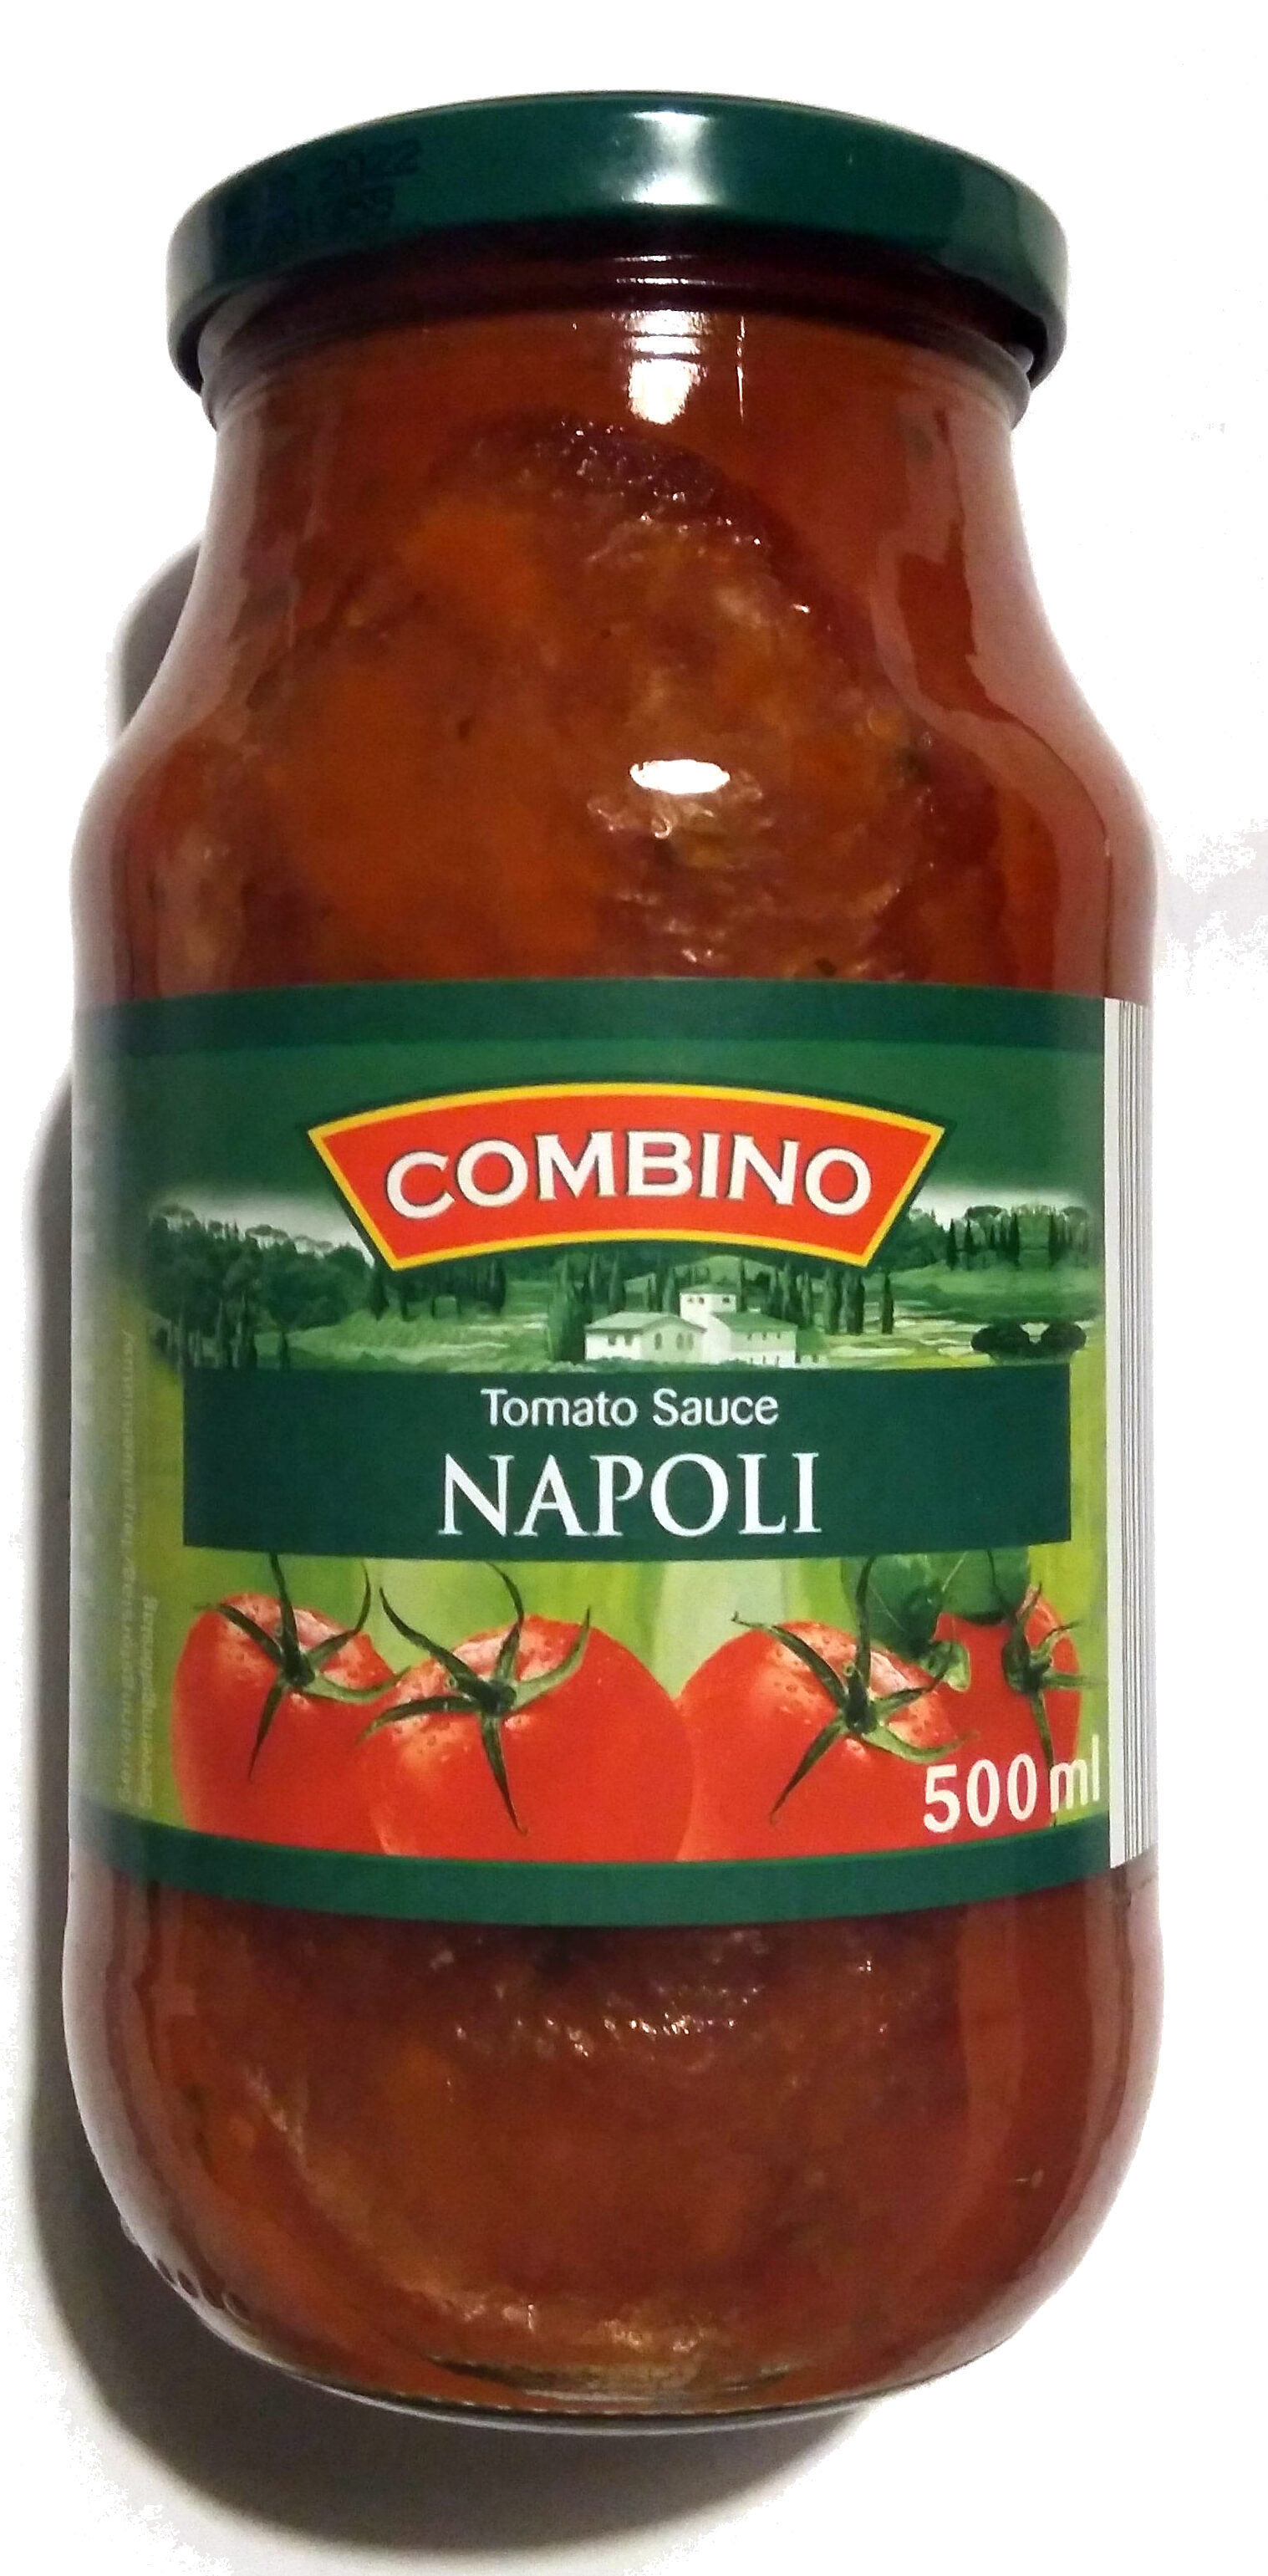 Napoli Tomato Sauce - Product - fi